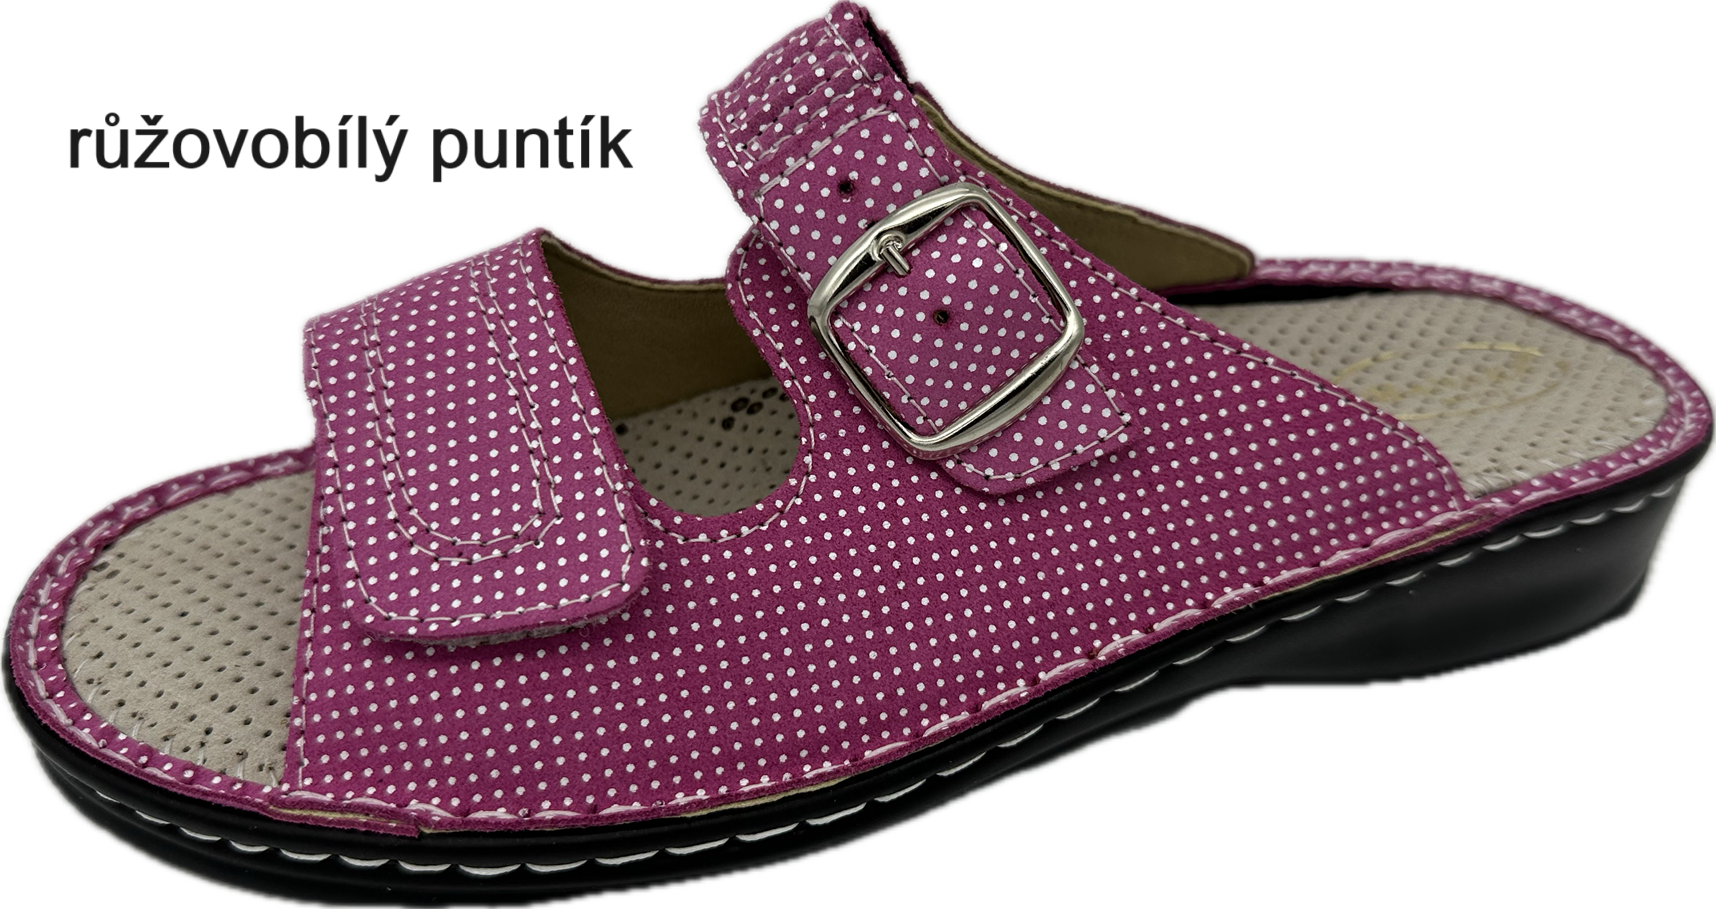 Boty Hanák vzor 305 - černá podešev Barva usně: růžovobílý puntík jemný, Velikosti obuvi: 35